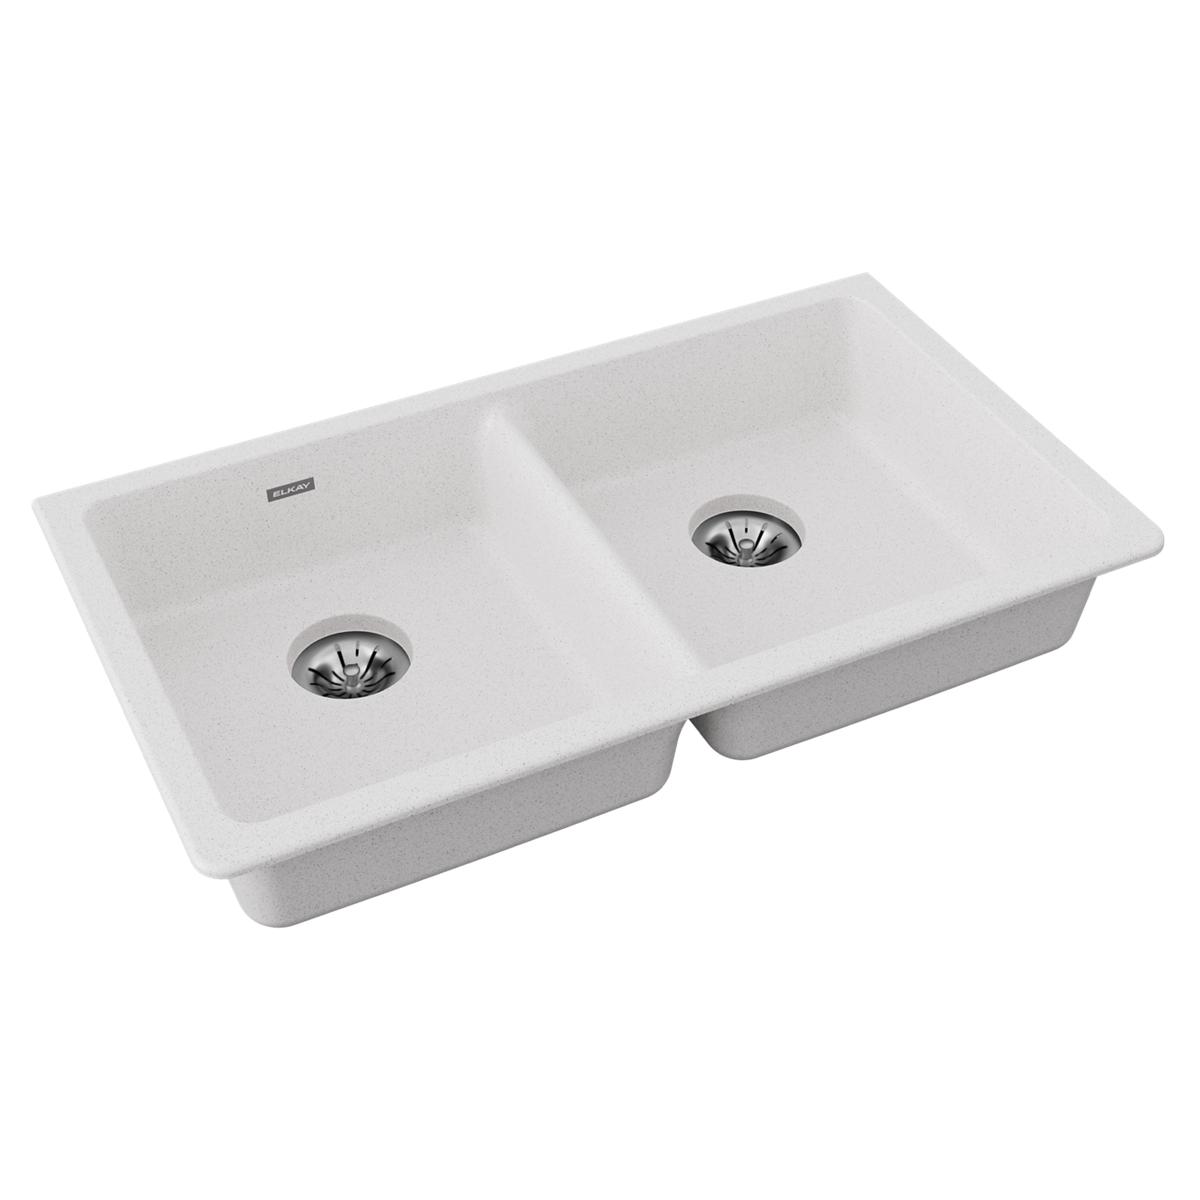 Elkay Quartz Classic 33" x 18-1/2" x 5-1/2" Double Bowl Undermount ADA Sink with Perfect Drain